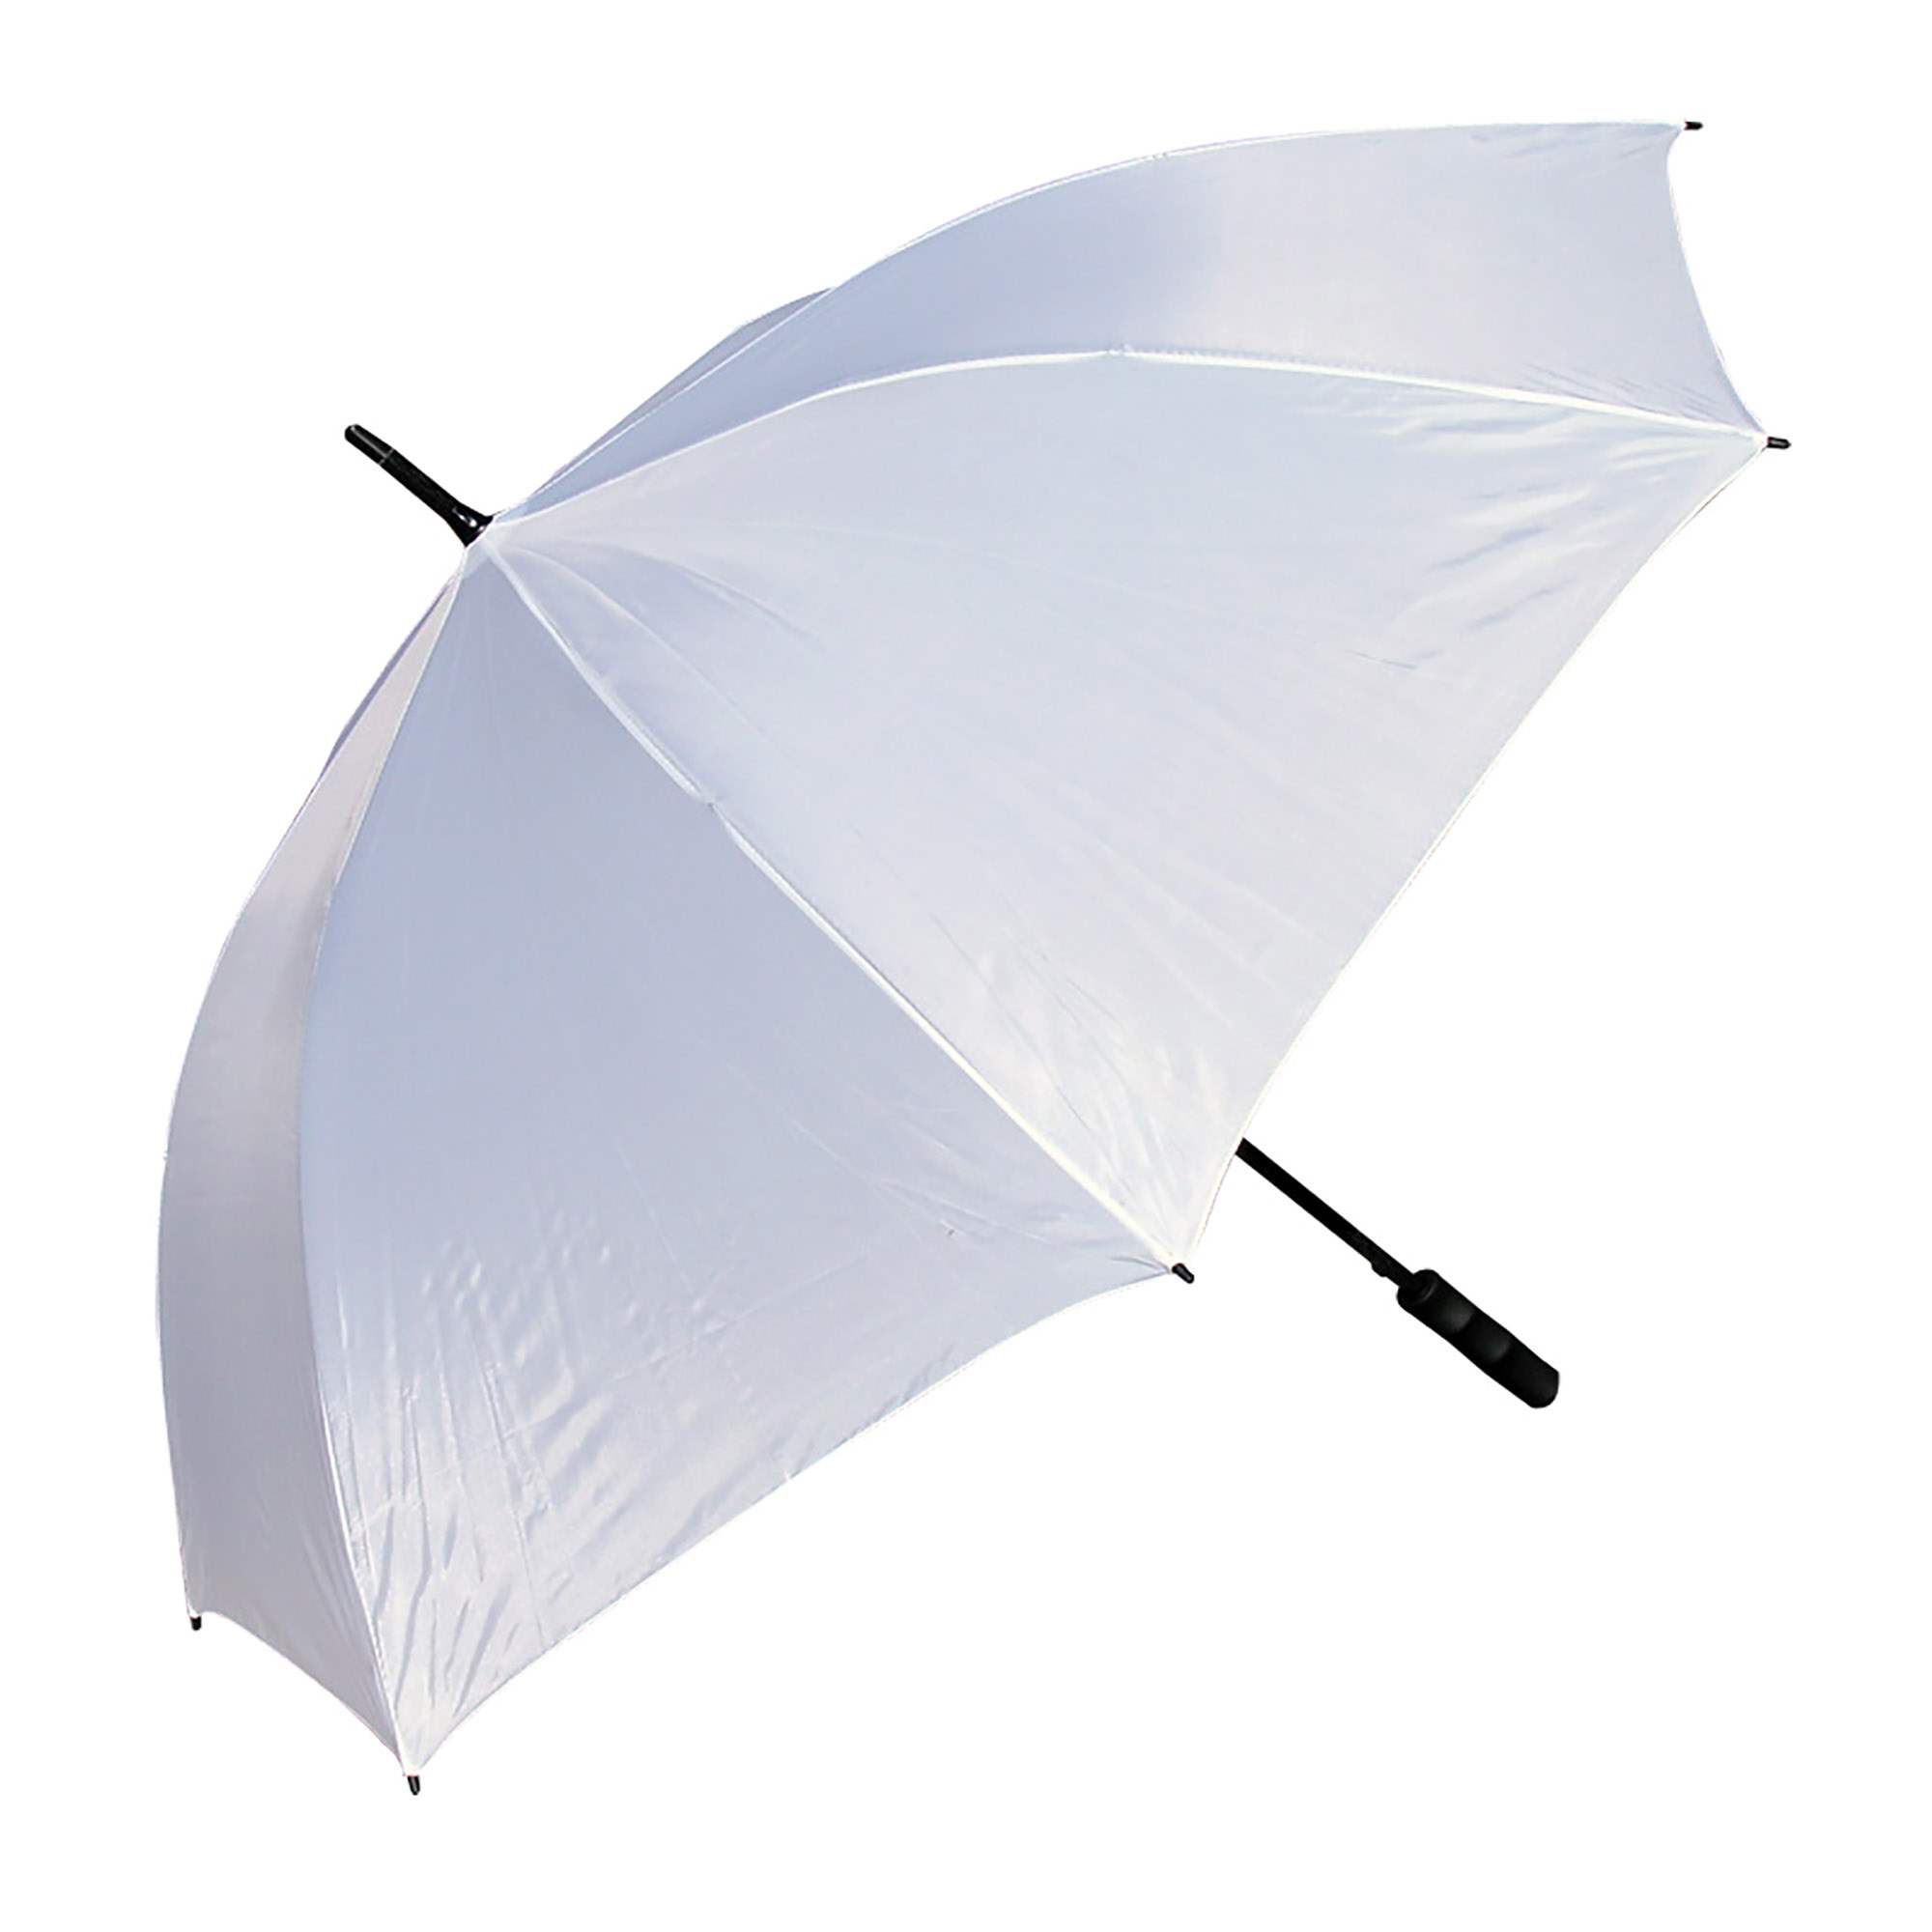 Bulk Promotional White Sands Umbrella Online In Perth Australia